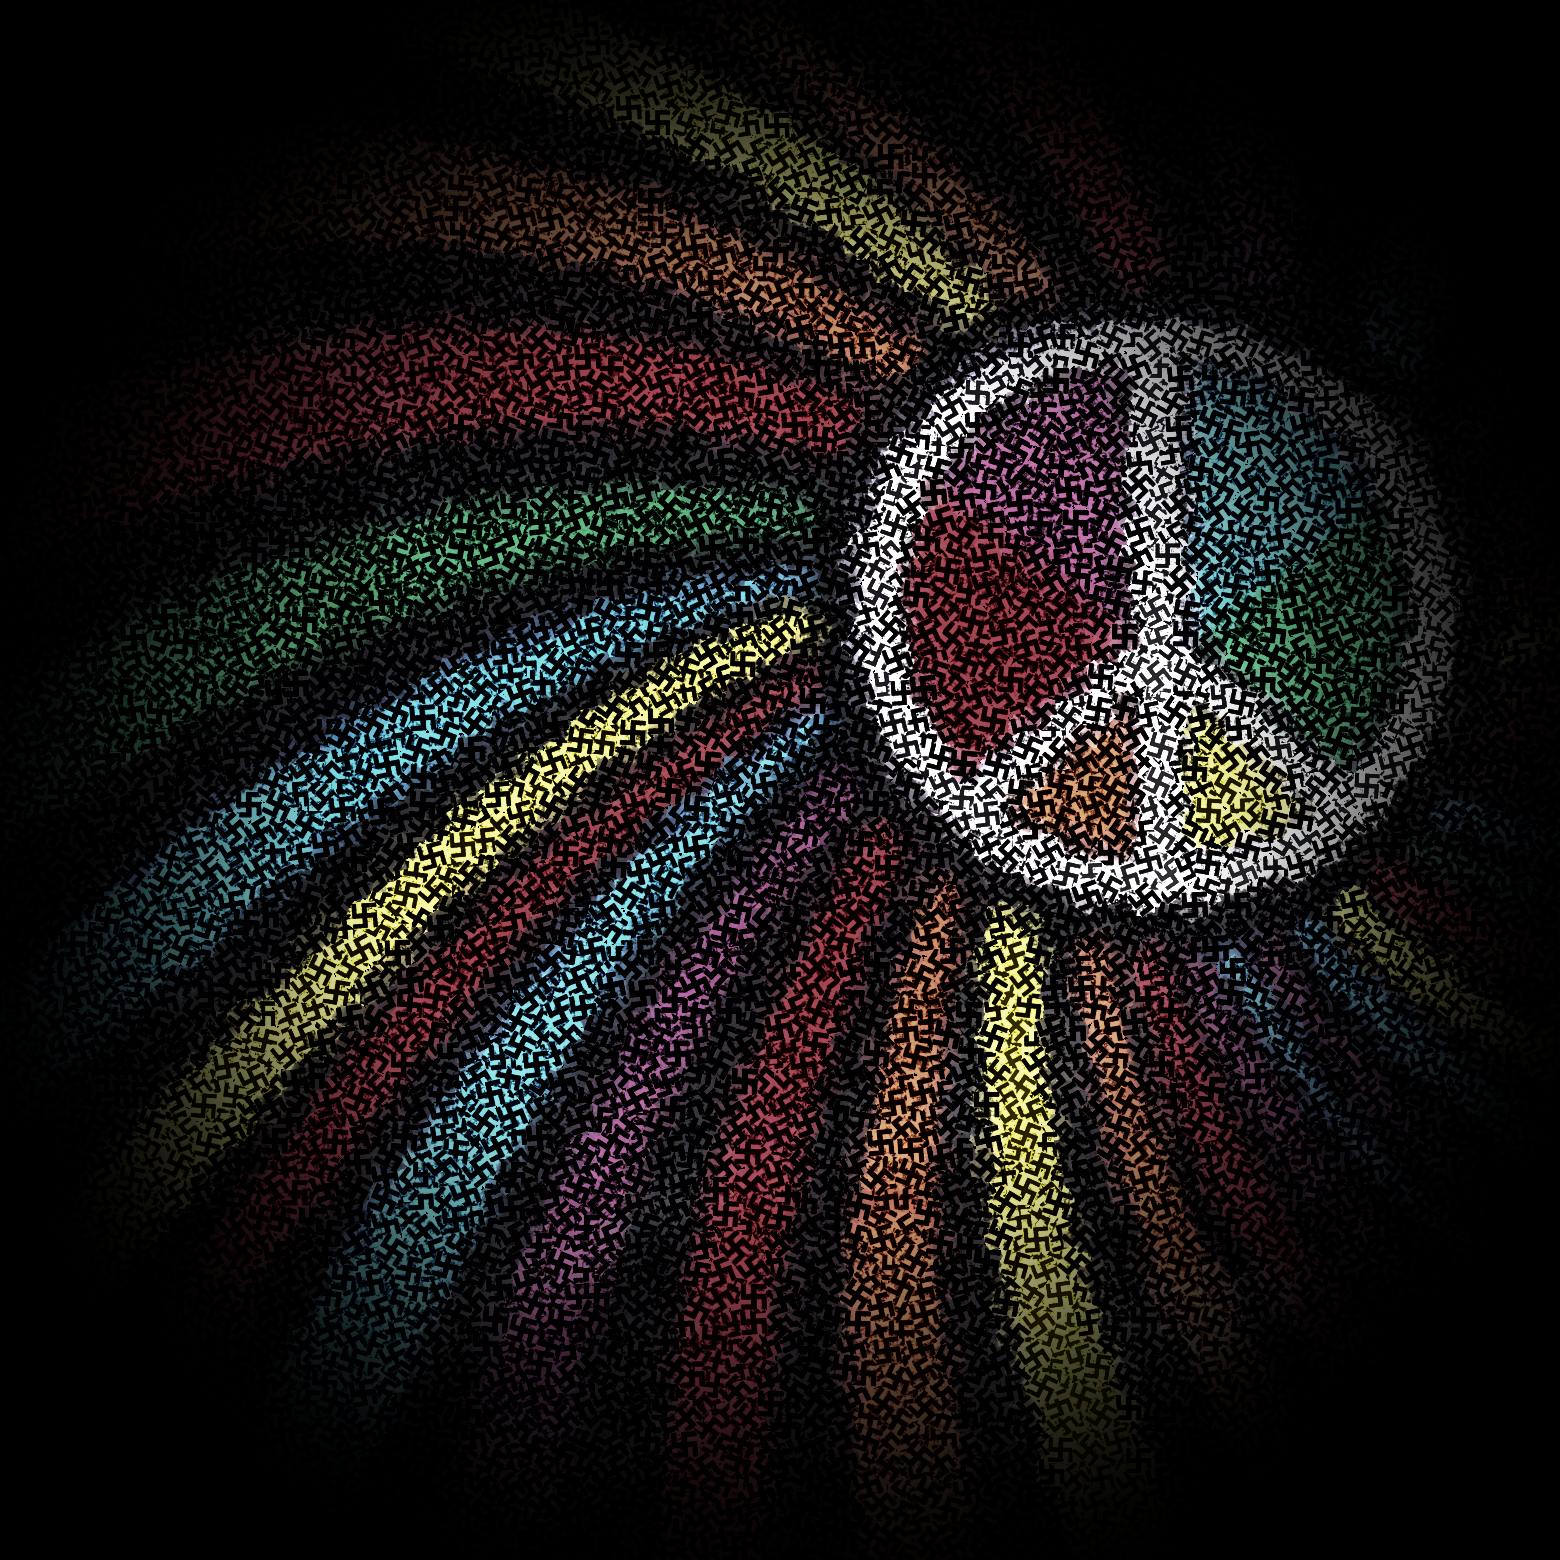 45+] Peace HD Wallpaper - WallpaperSafari